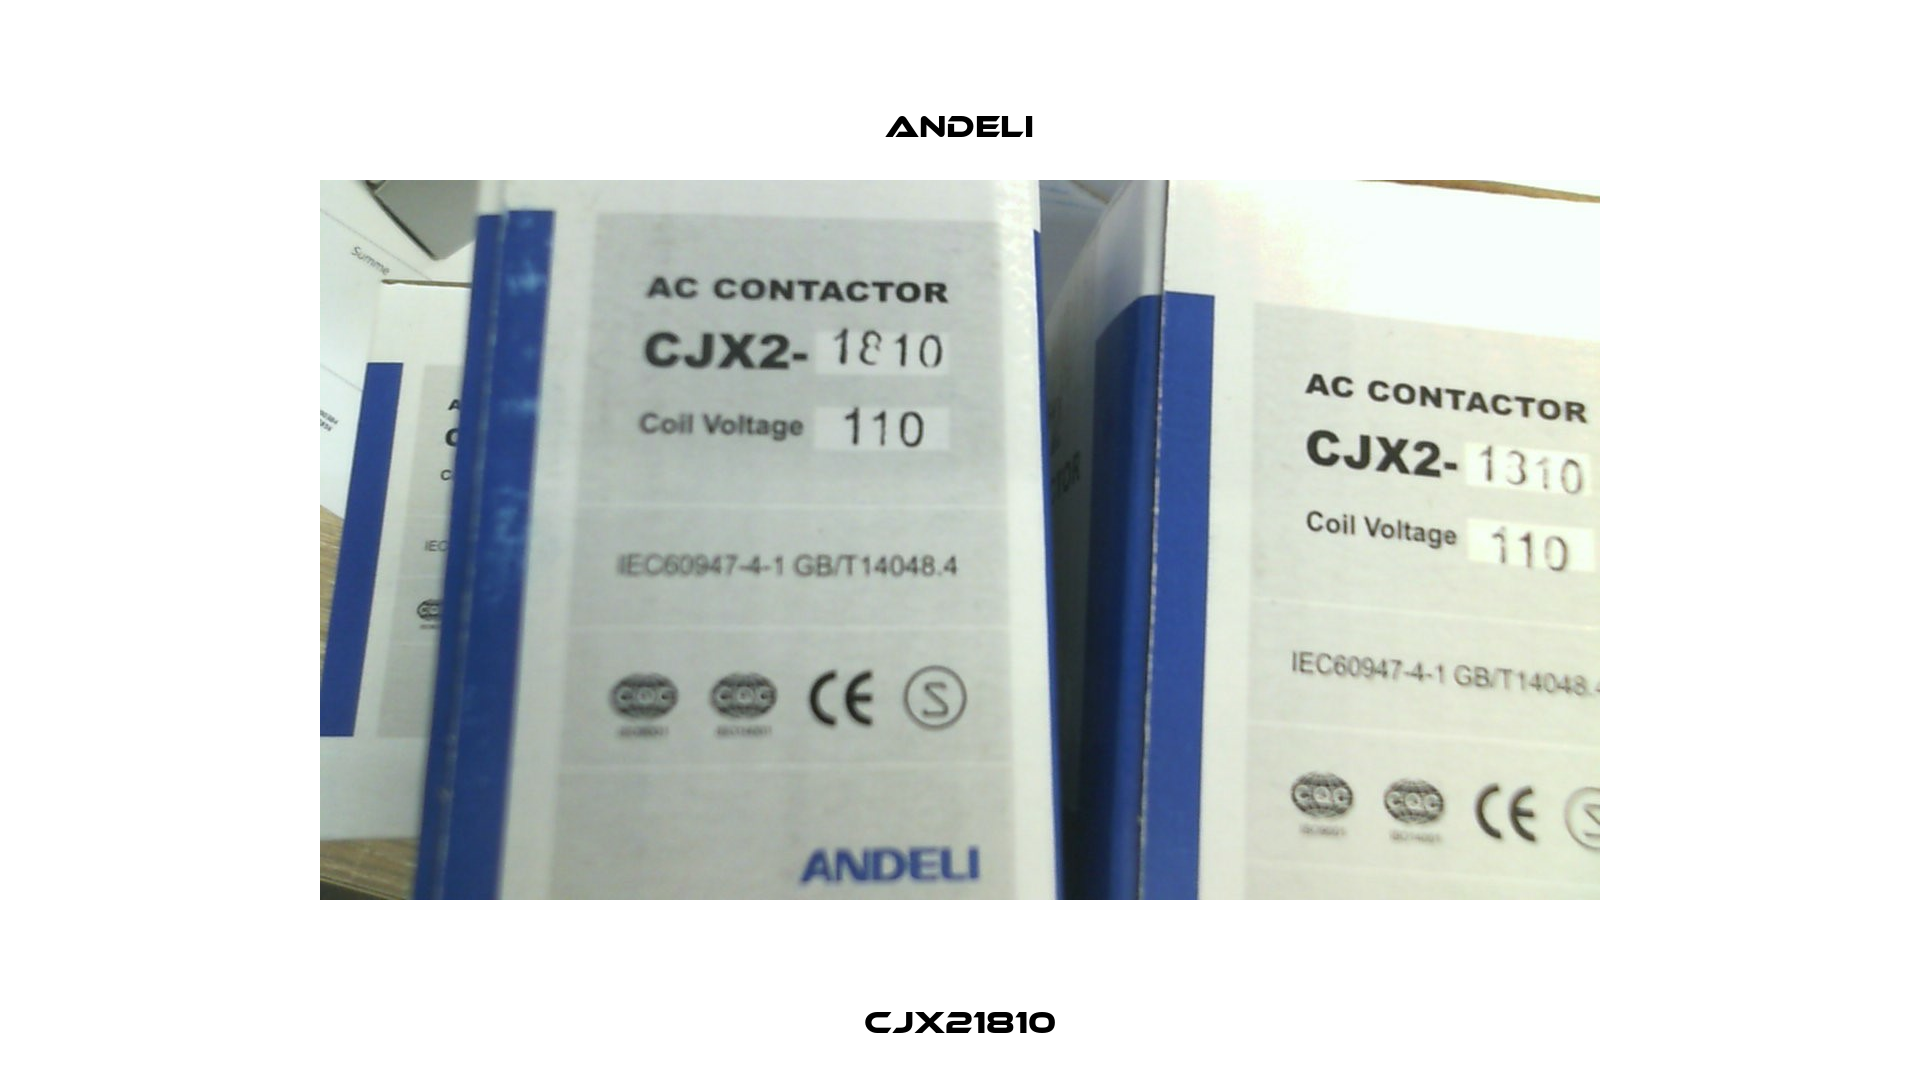 CJX21810 Andeli